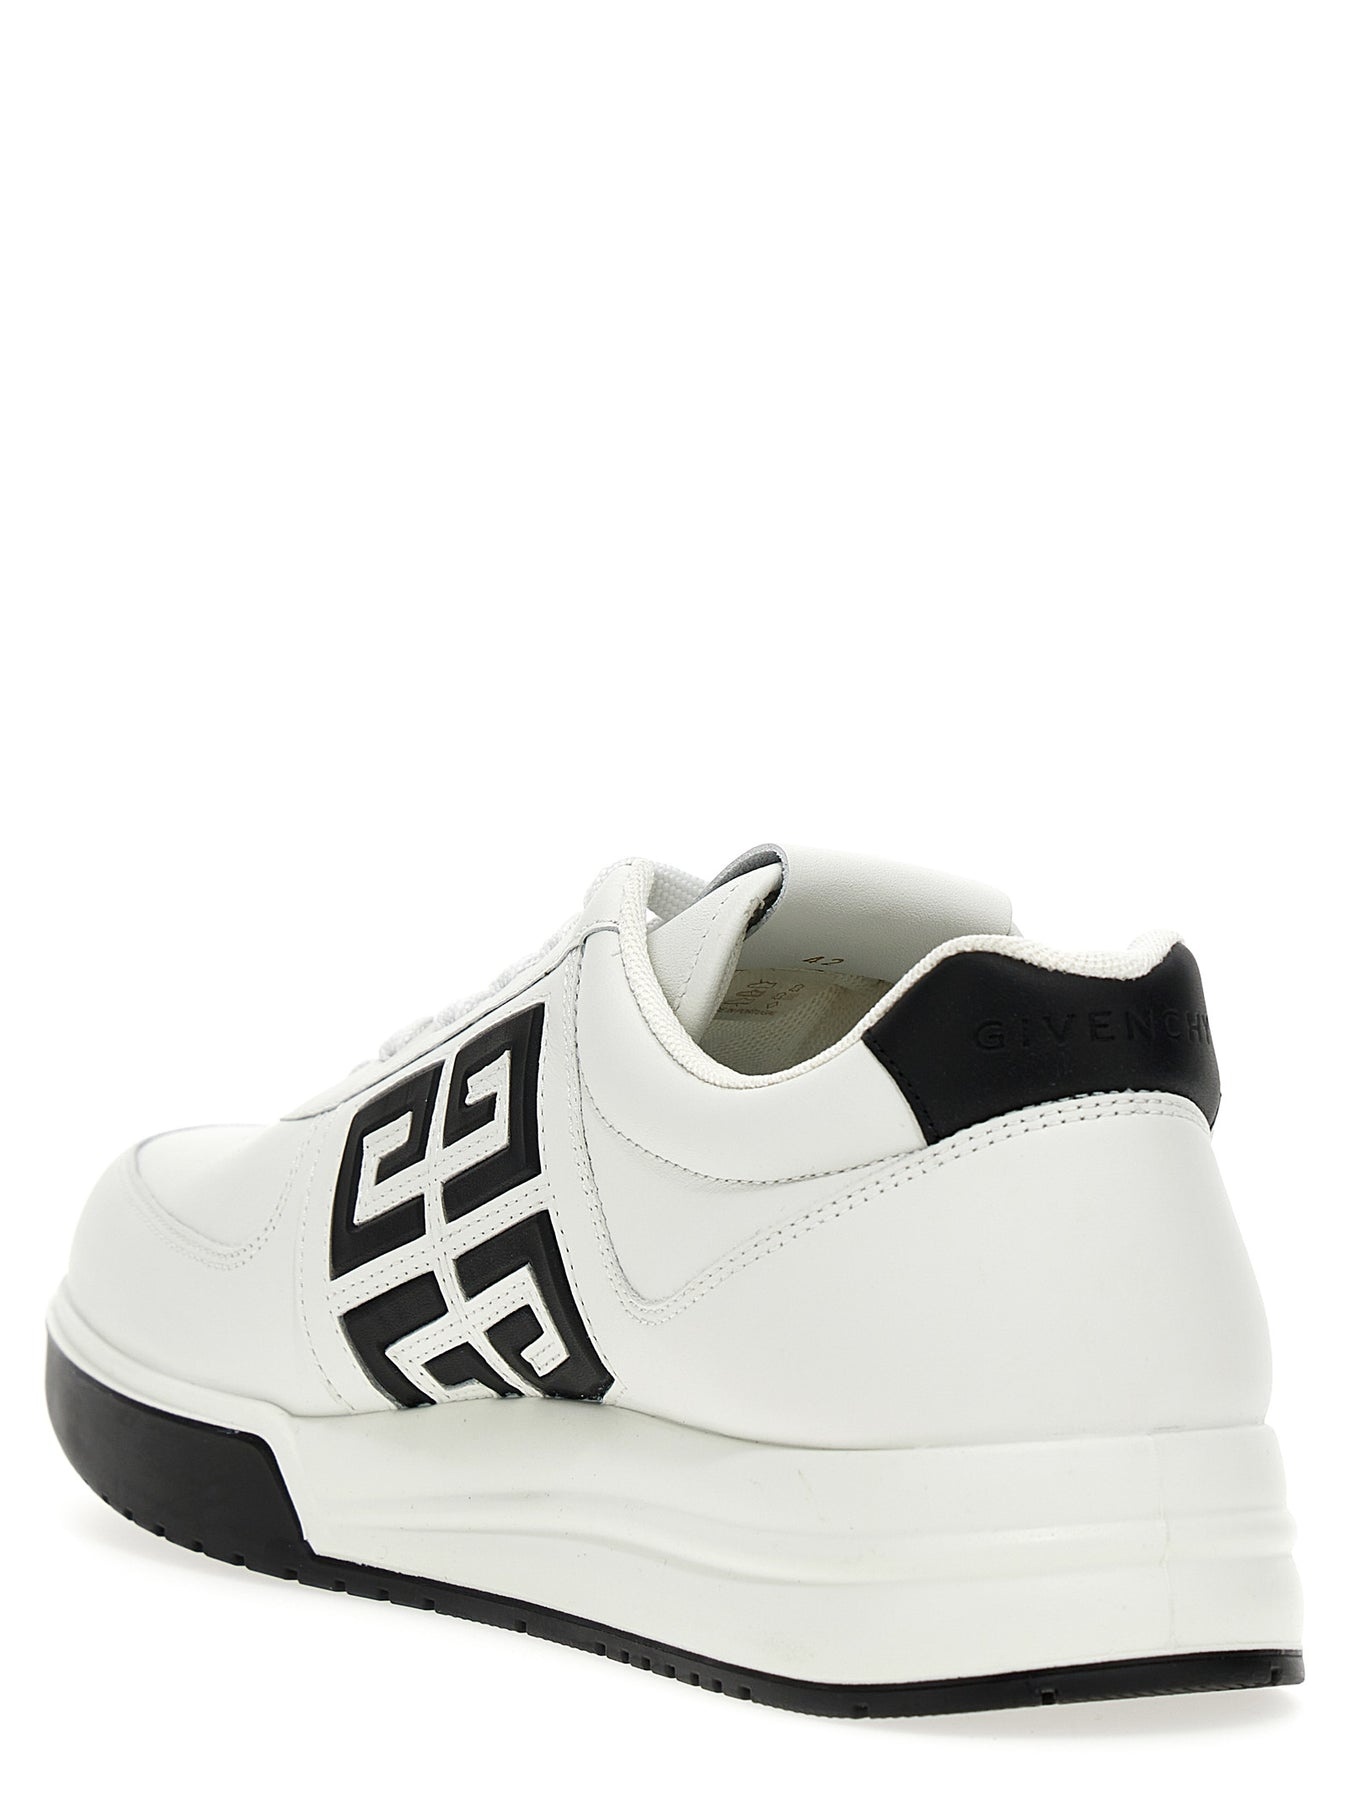 G4 Sneakers White/Black - 2